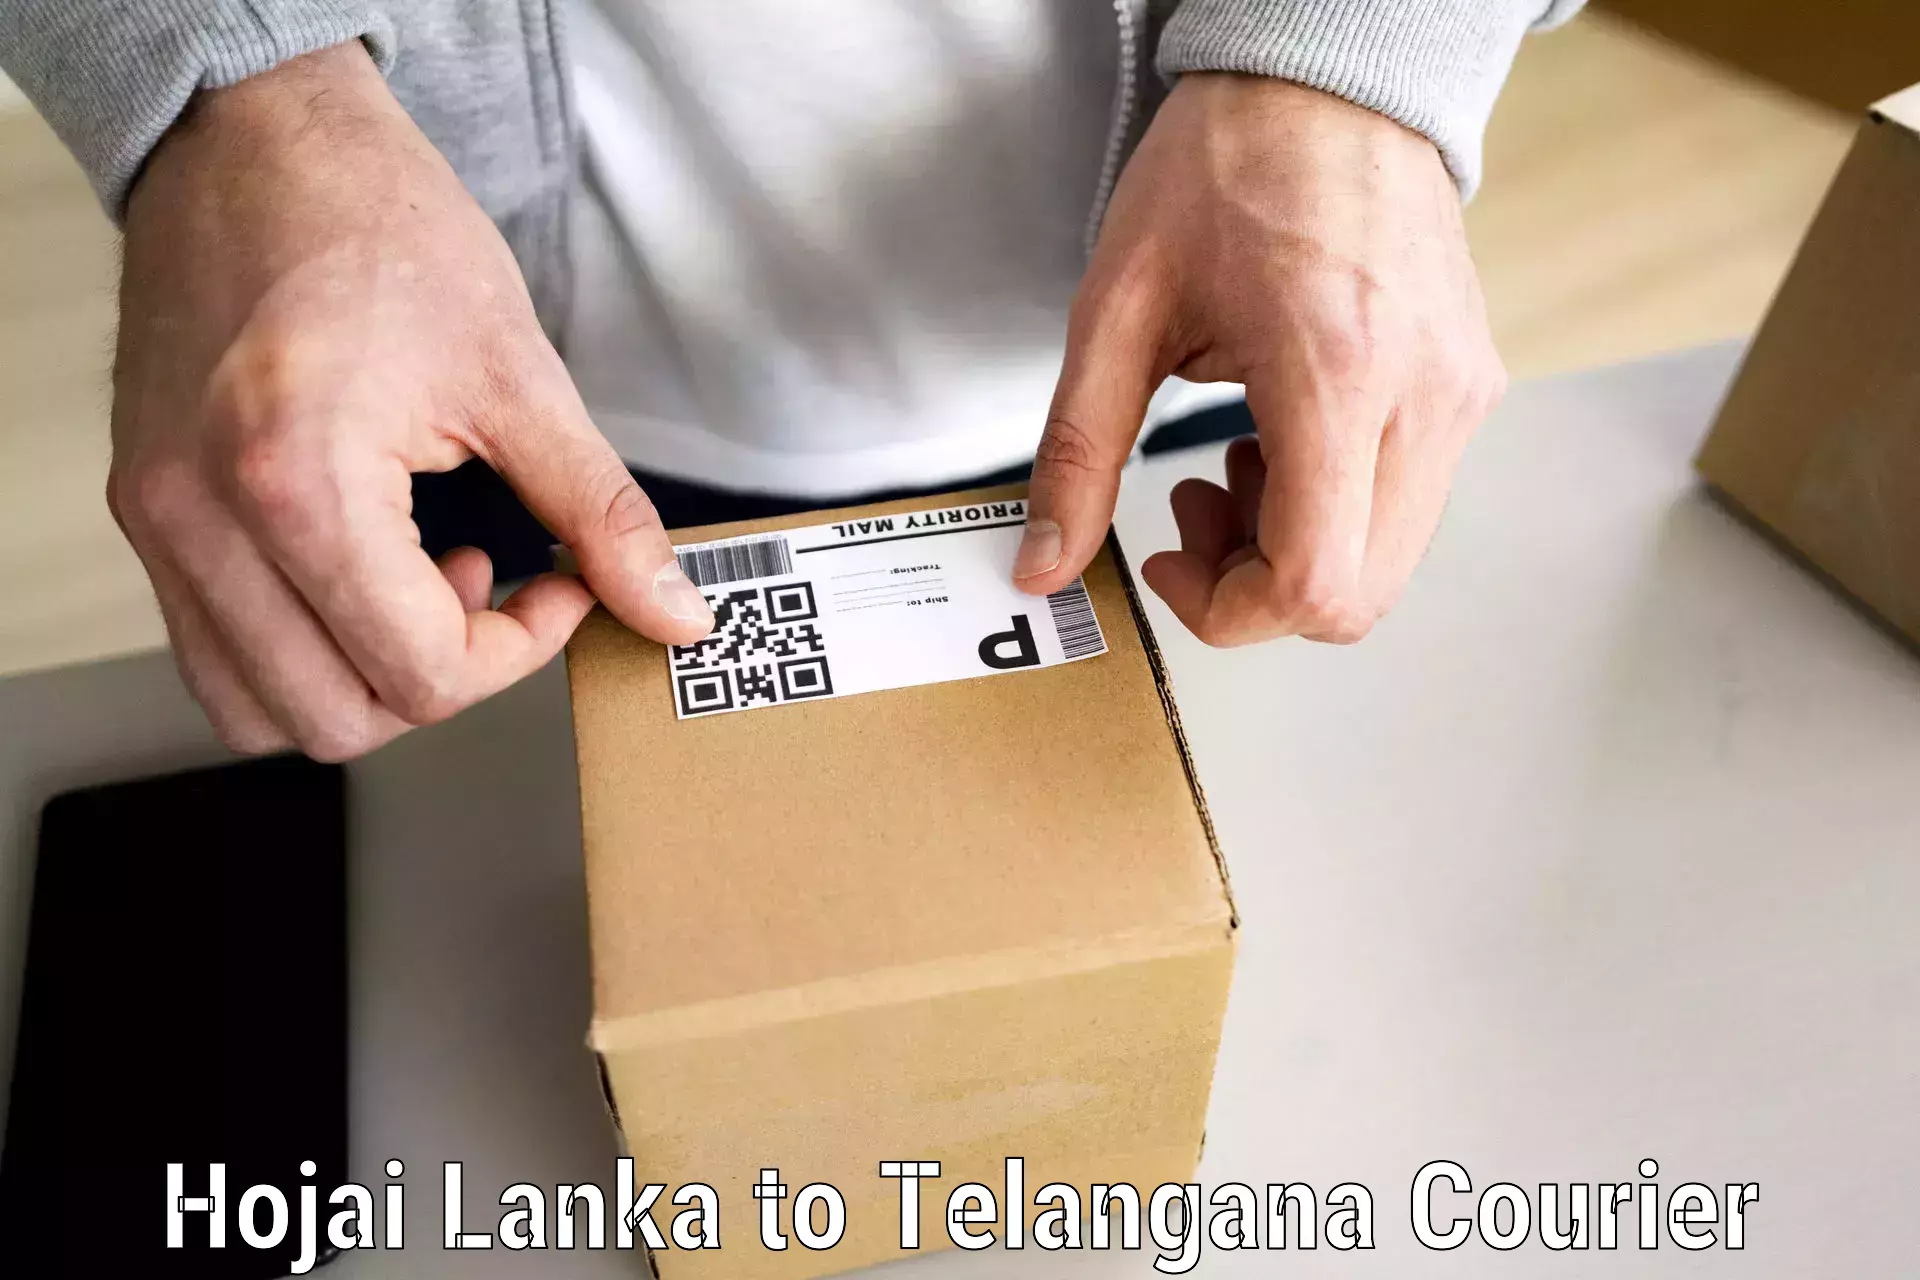 Household goods transport service Hojai Lanka to Manneguda